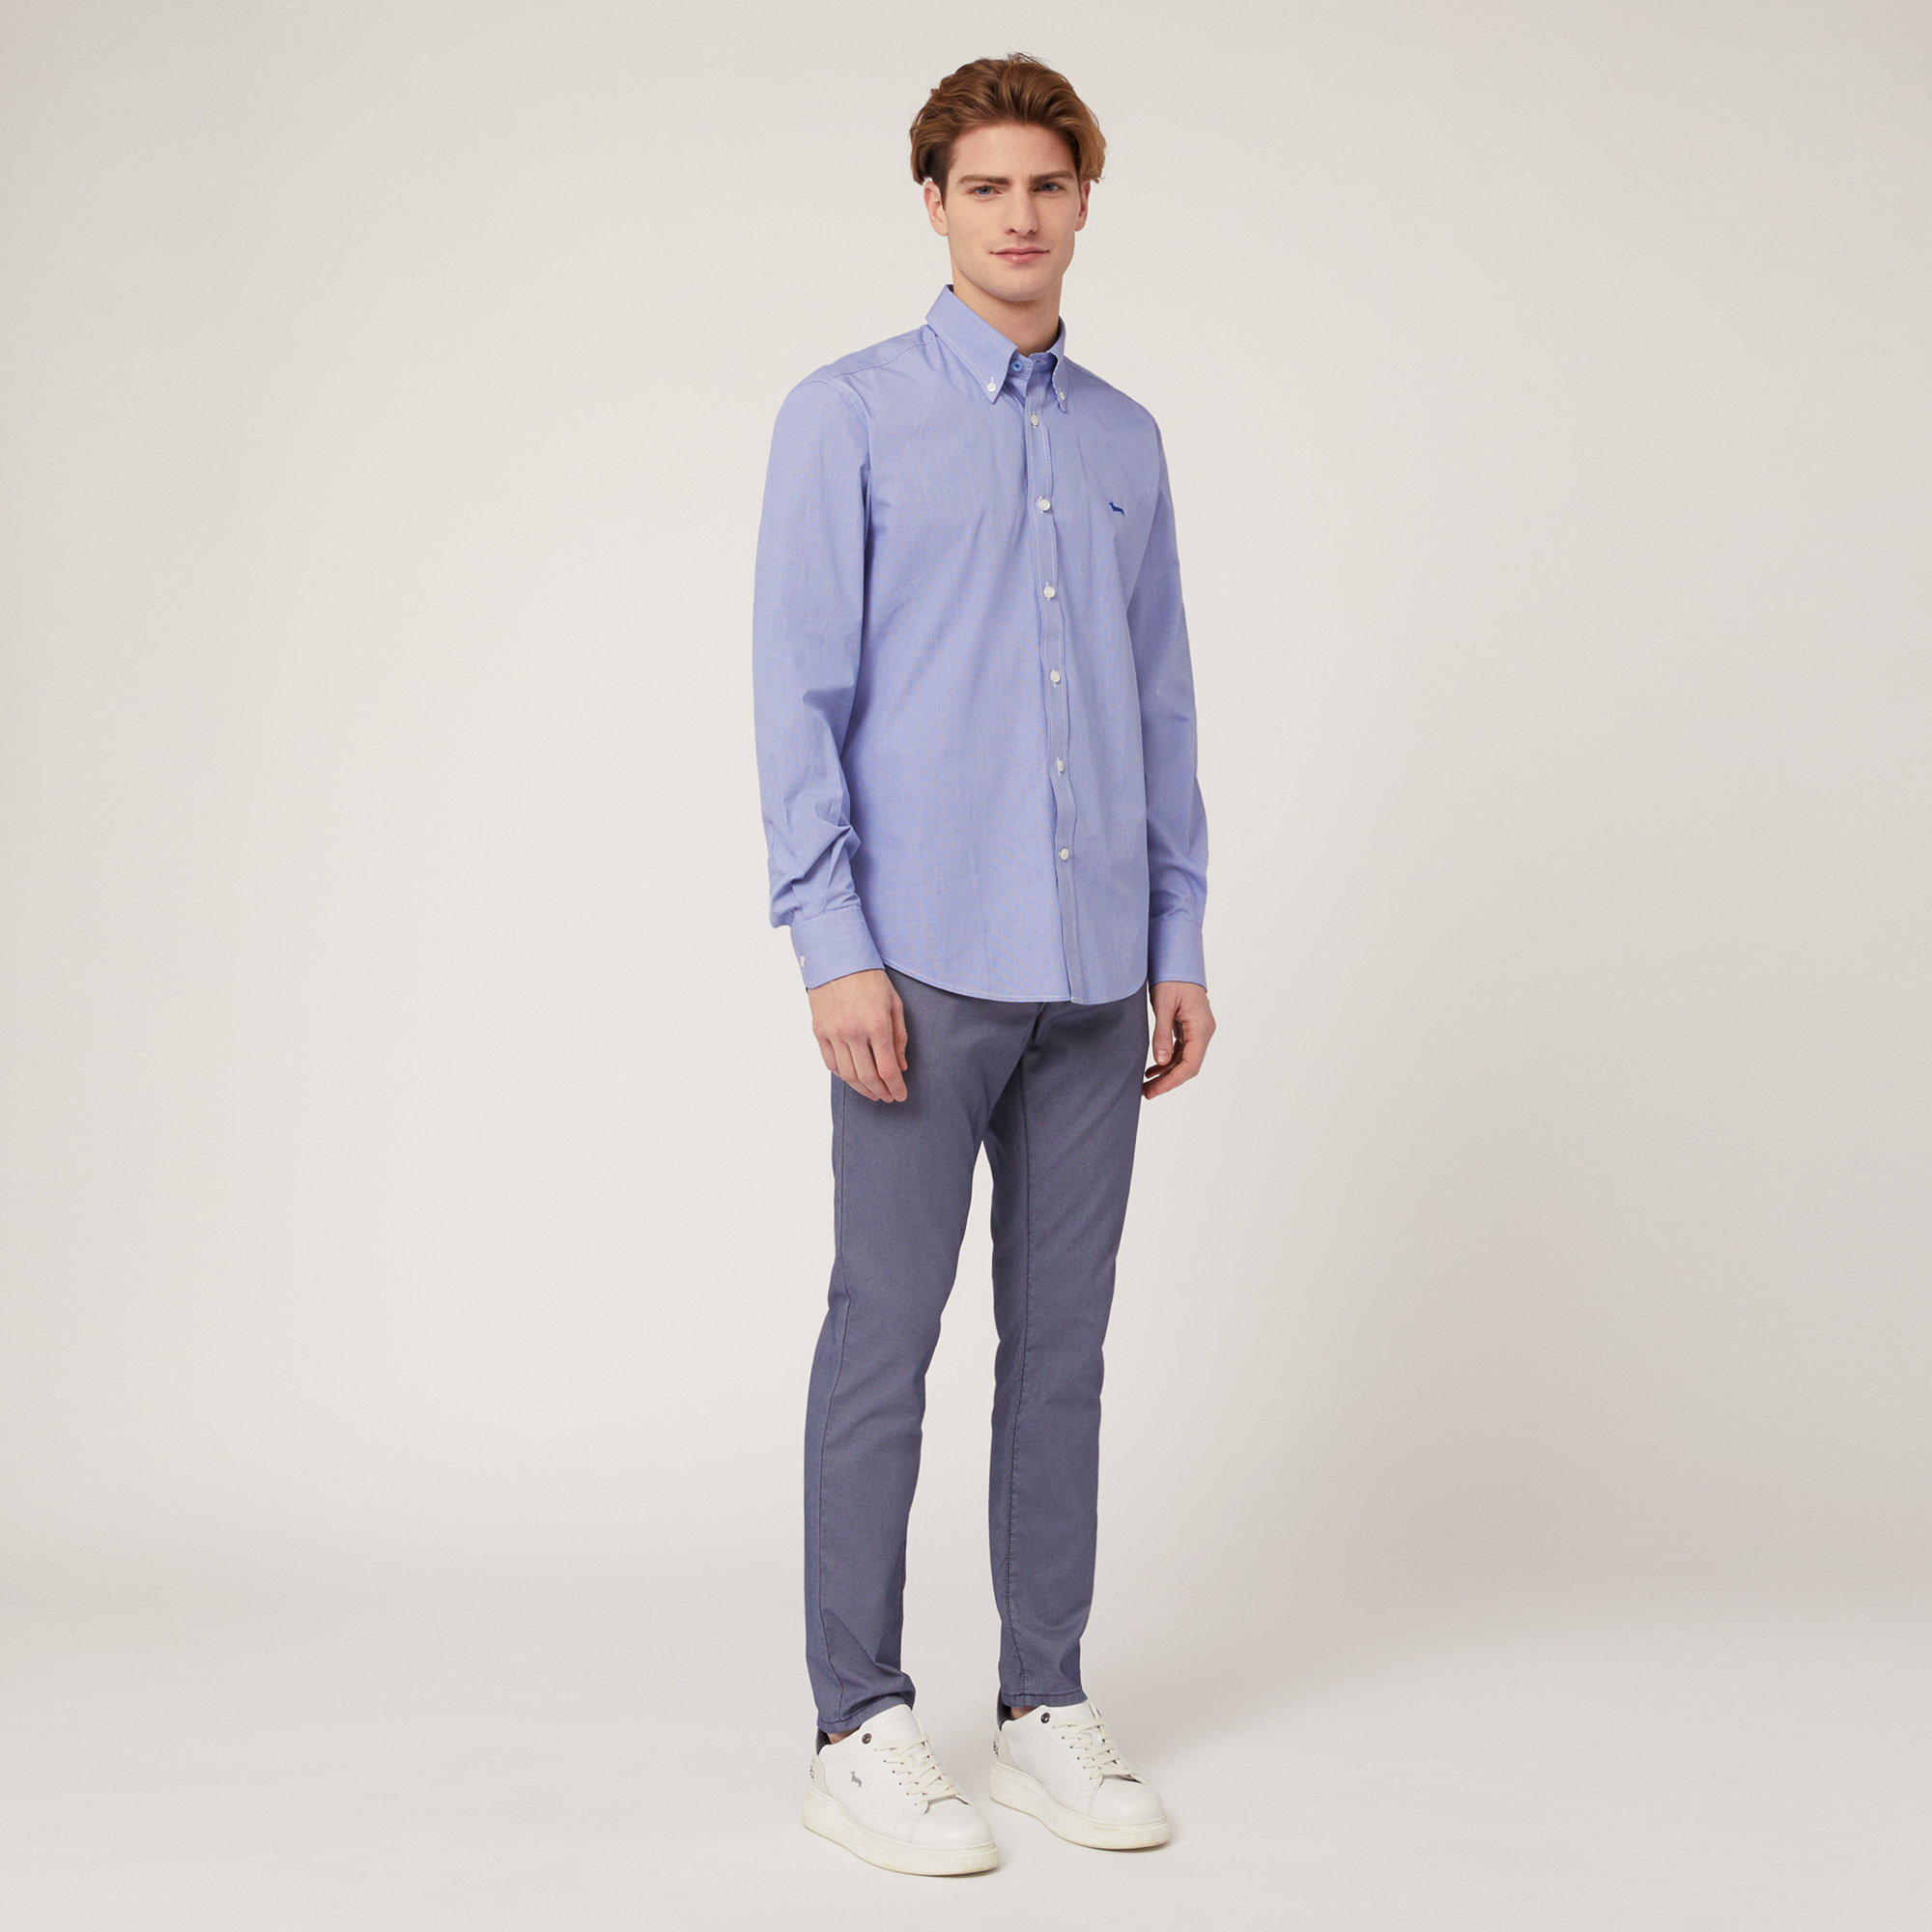 Hemd aus Baumwolle Regular Fit, Blau, large image number 3